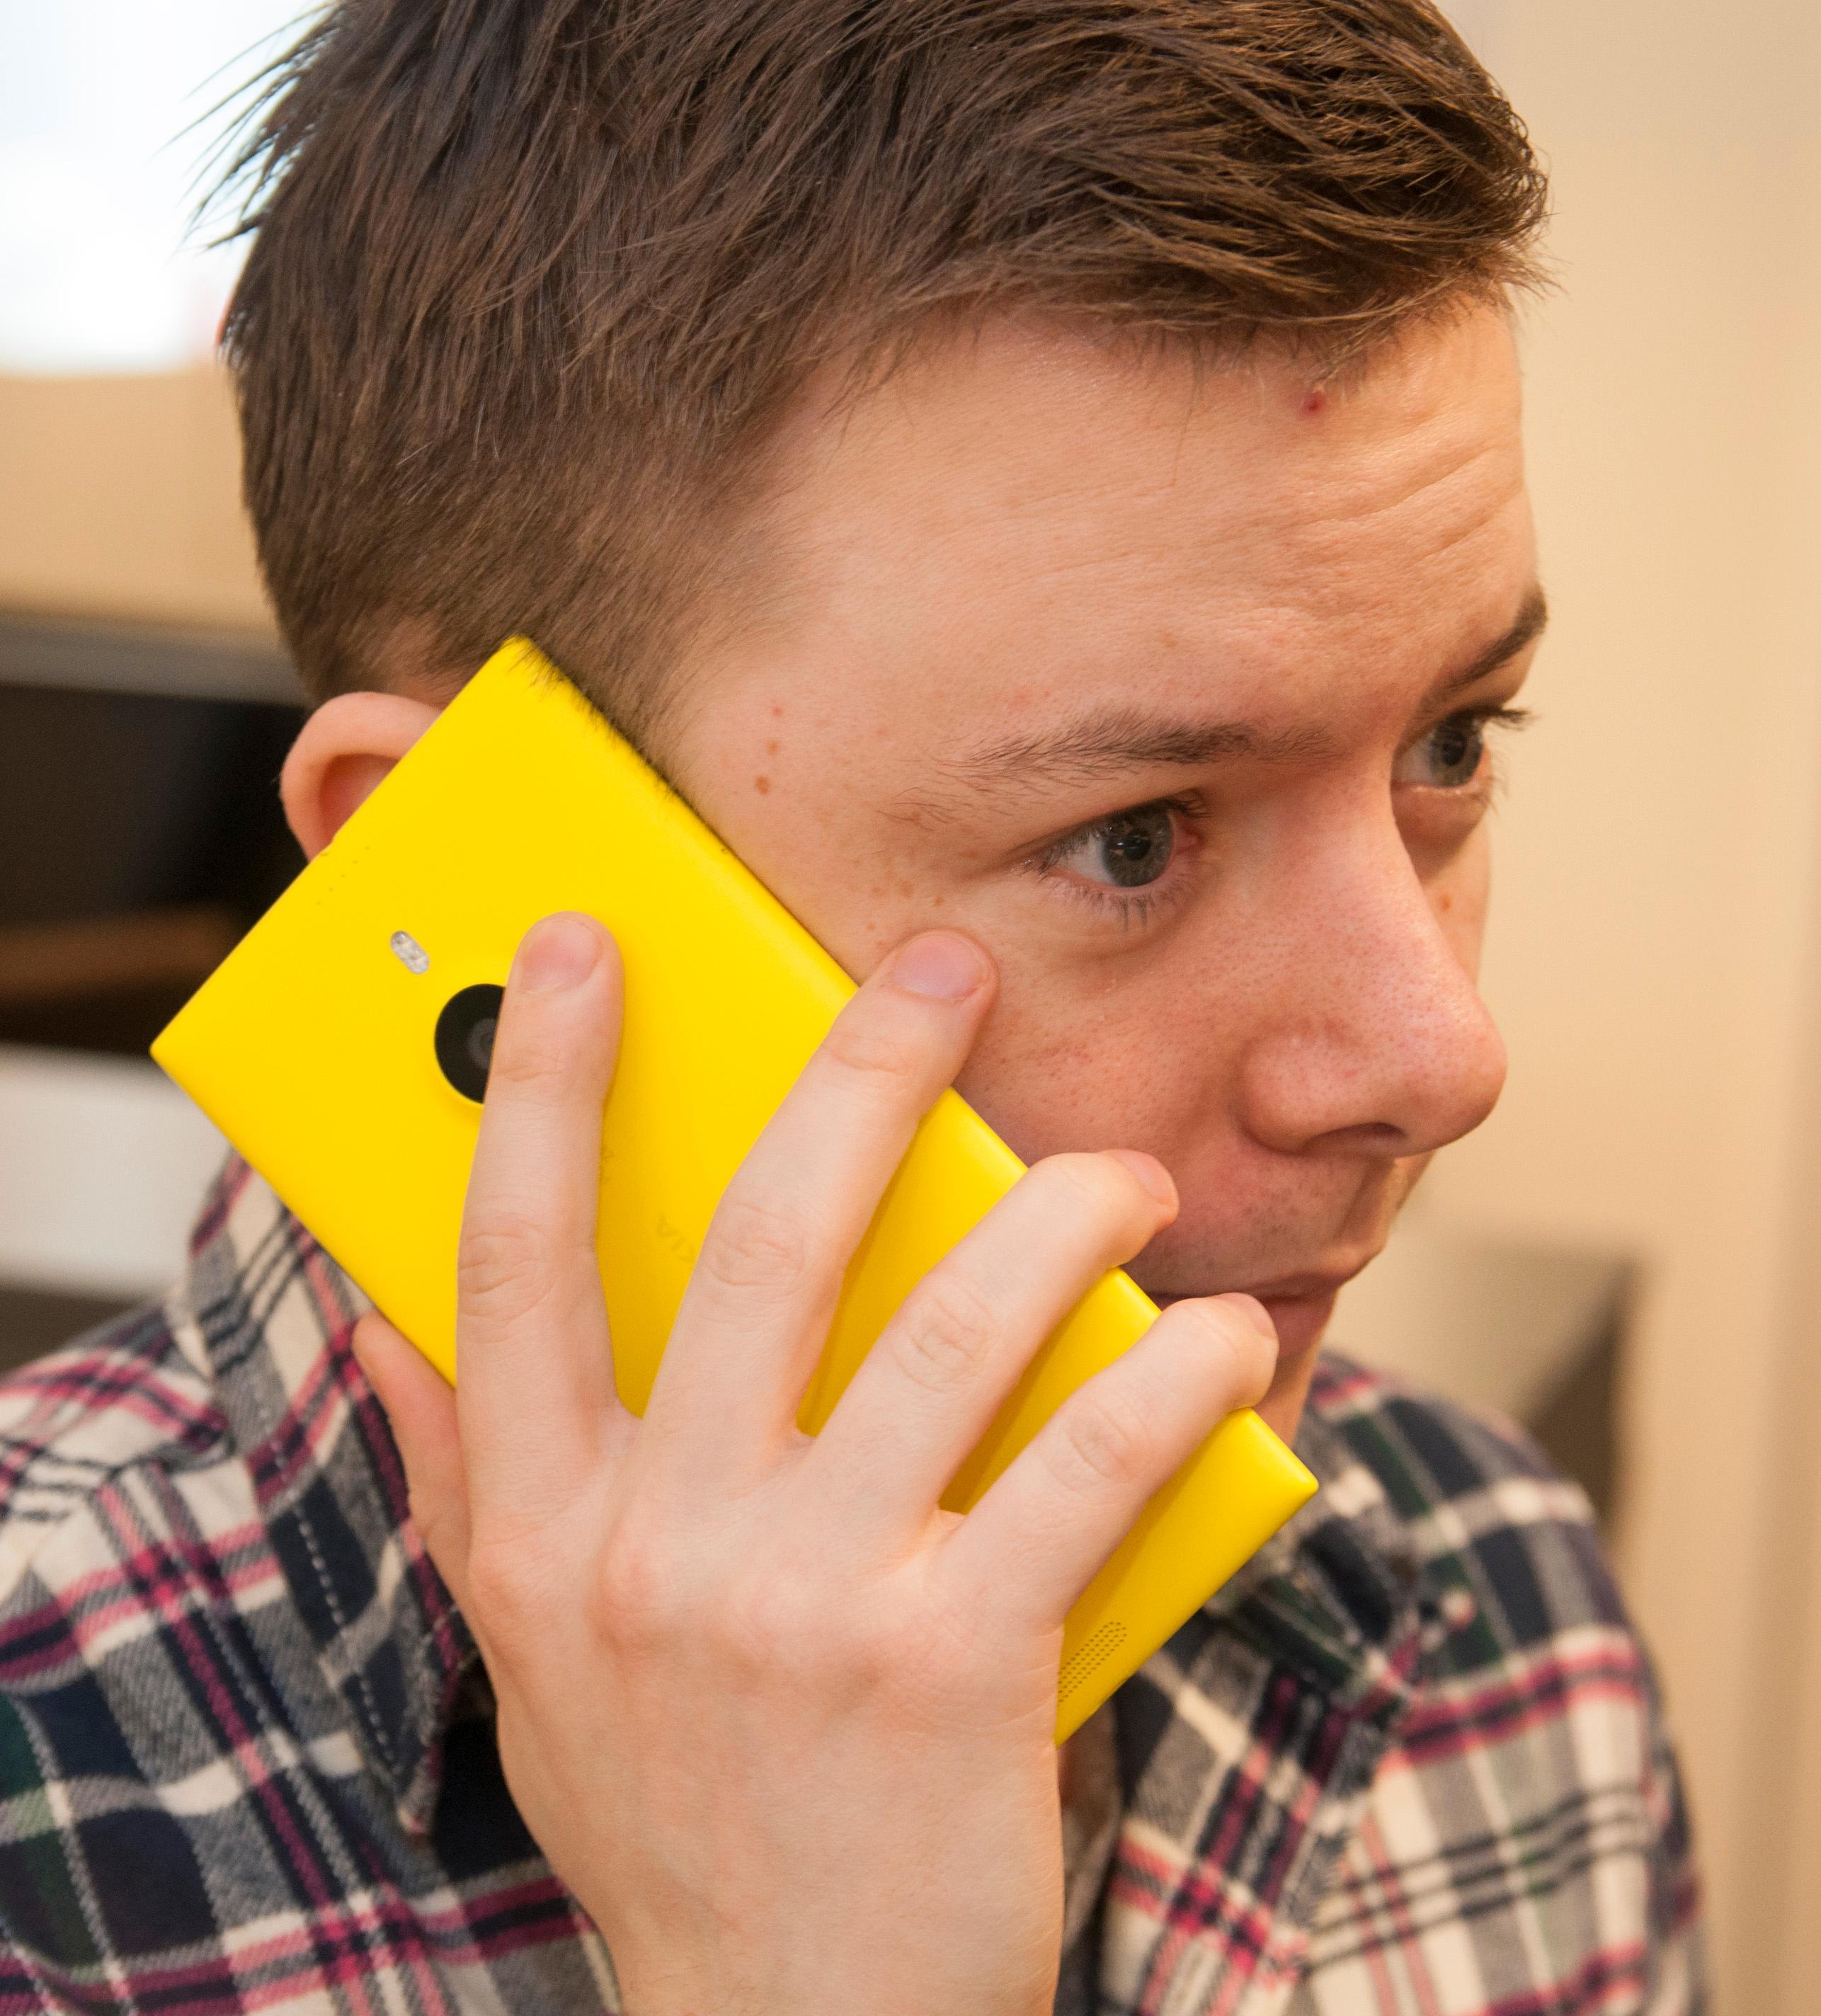 Lumia 1520 er en voksen telefon, og er nok i største laget for mange hender.Foto: Finn Jarle Kvalheim, Amobil.no